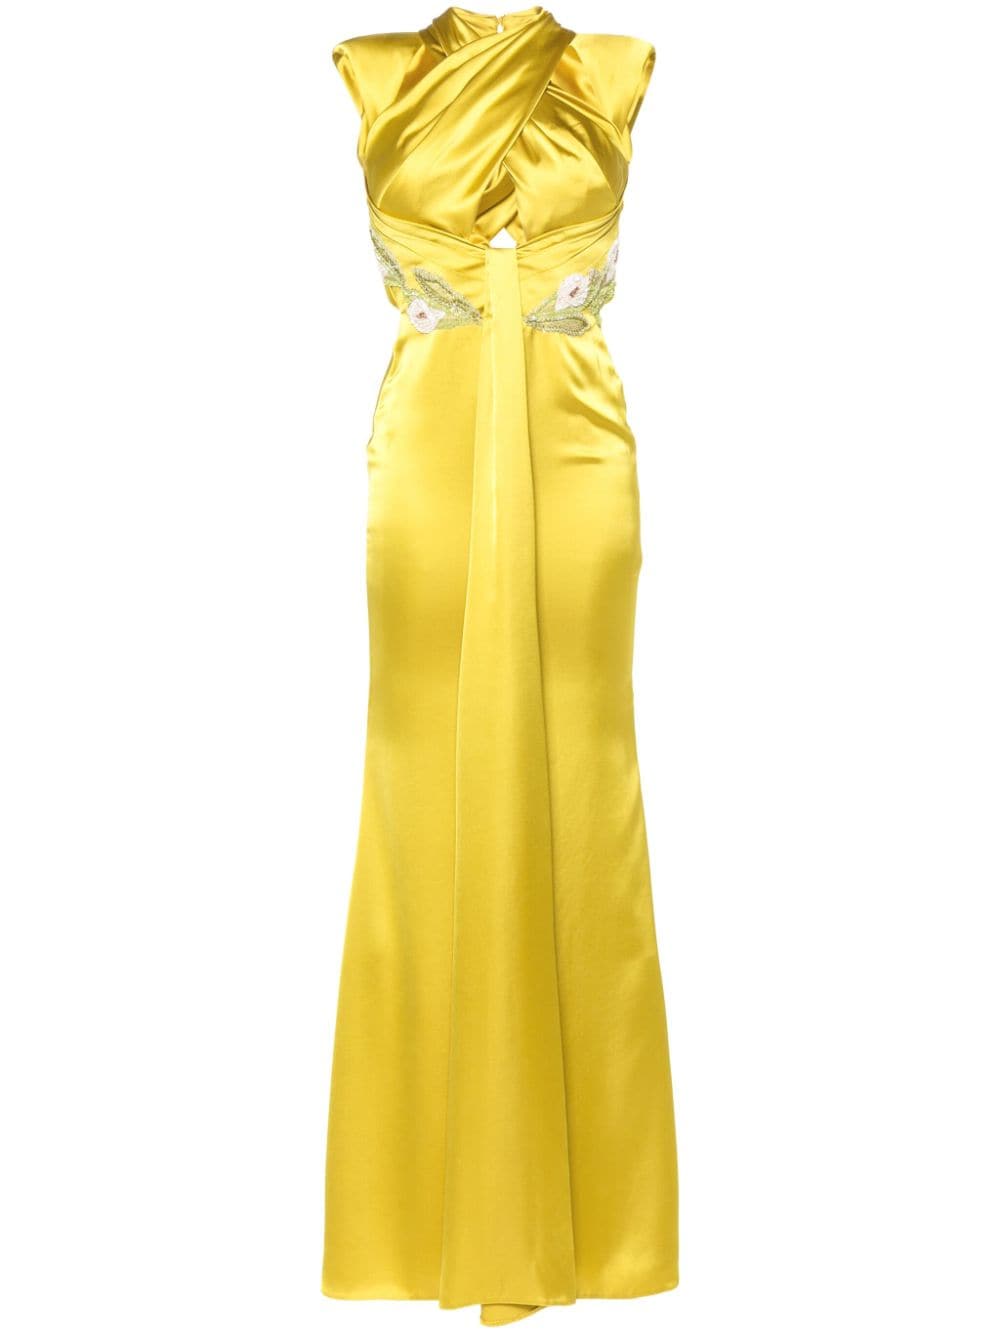 CRISTALLINI Elysée gown - Yellow von CRISTALLINI